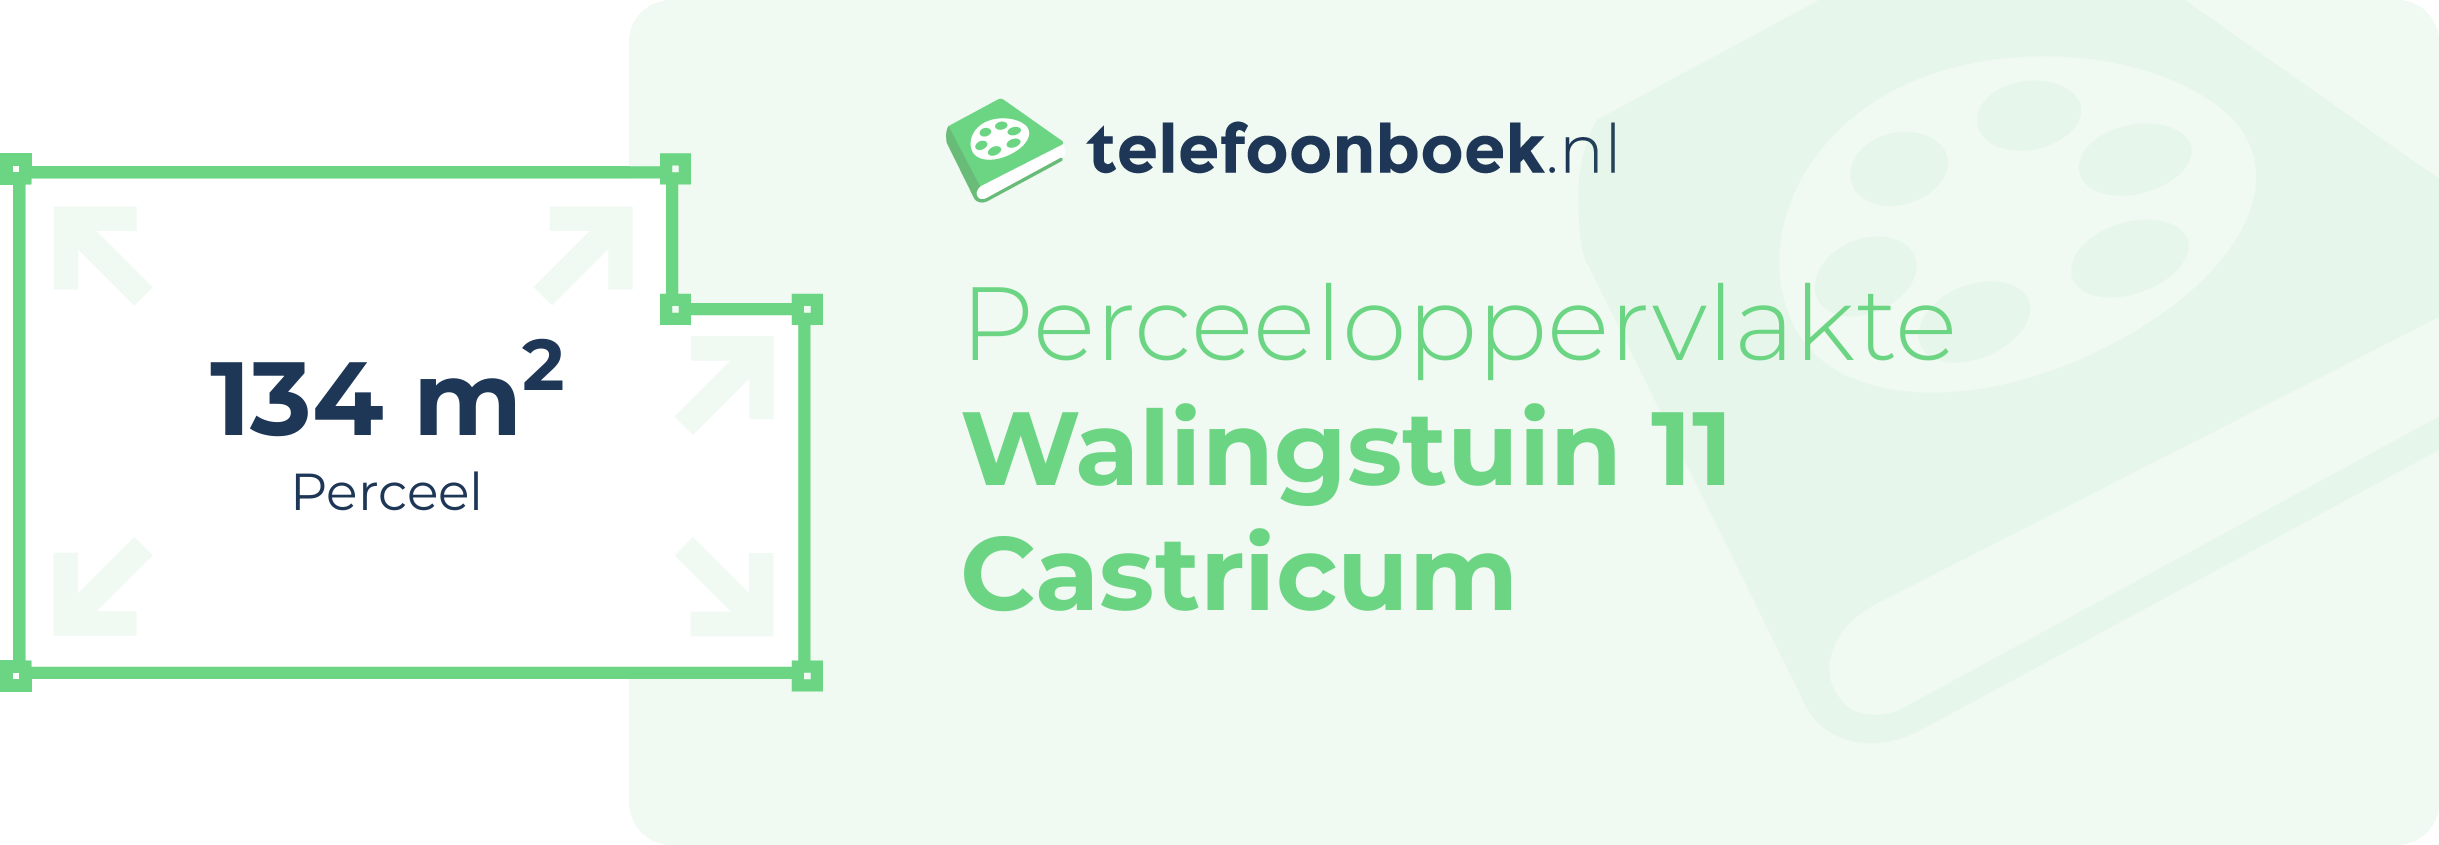 Perceeloppervlakte Walingstuin 11 Castricum